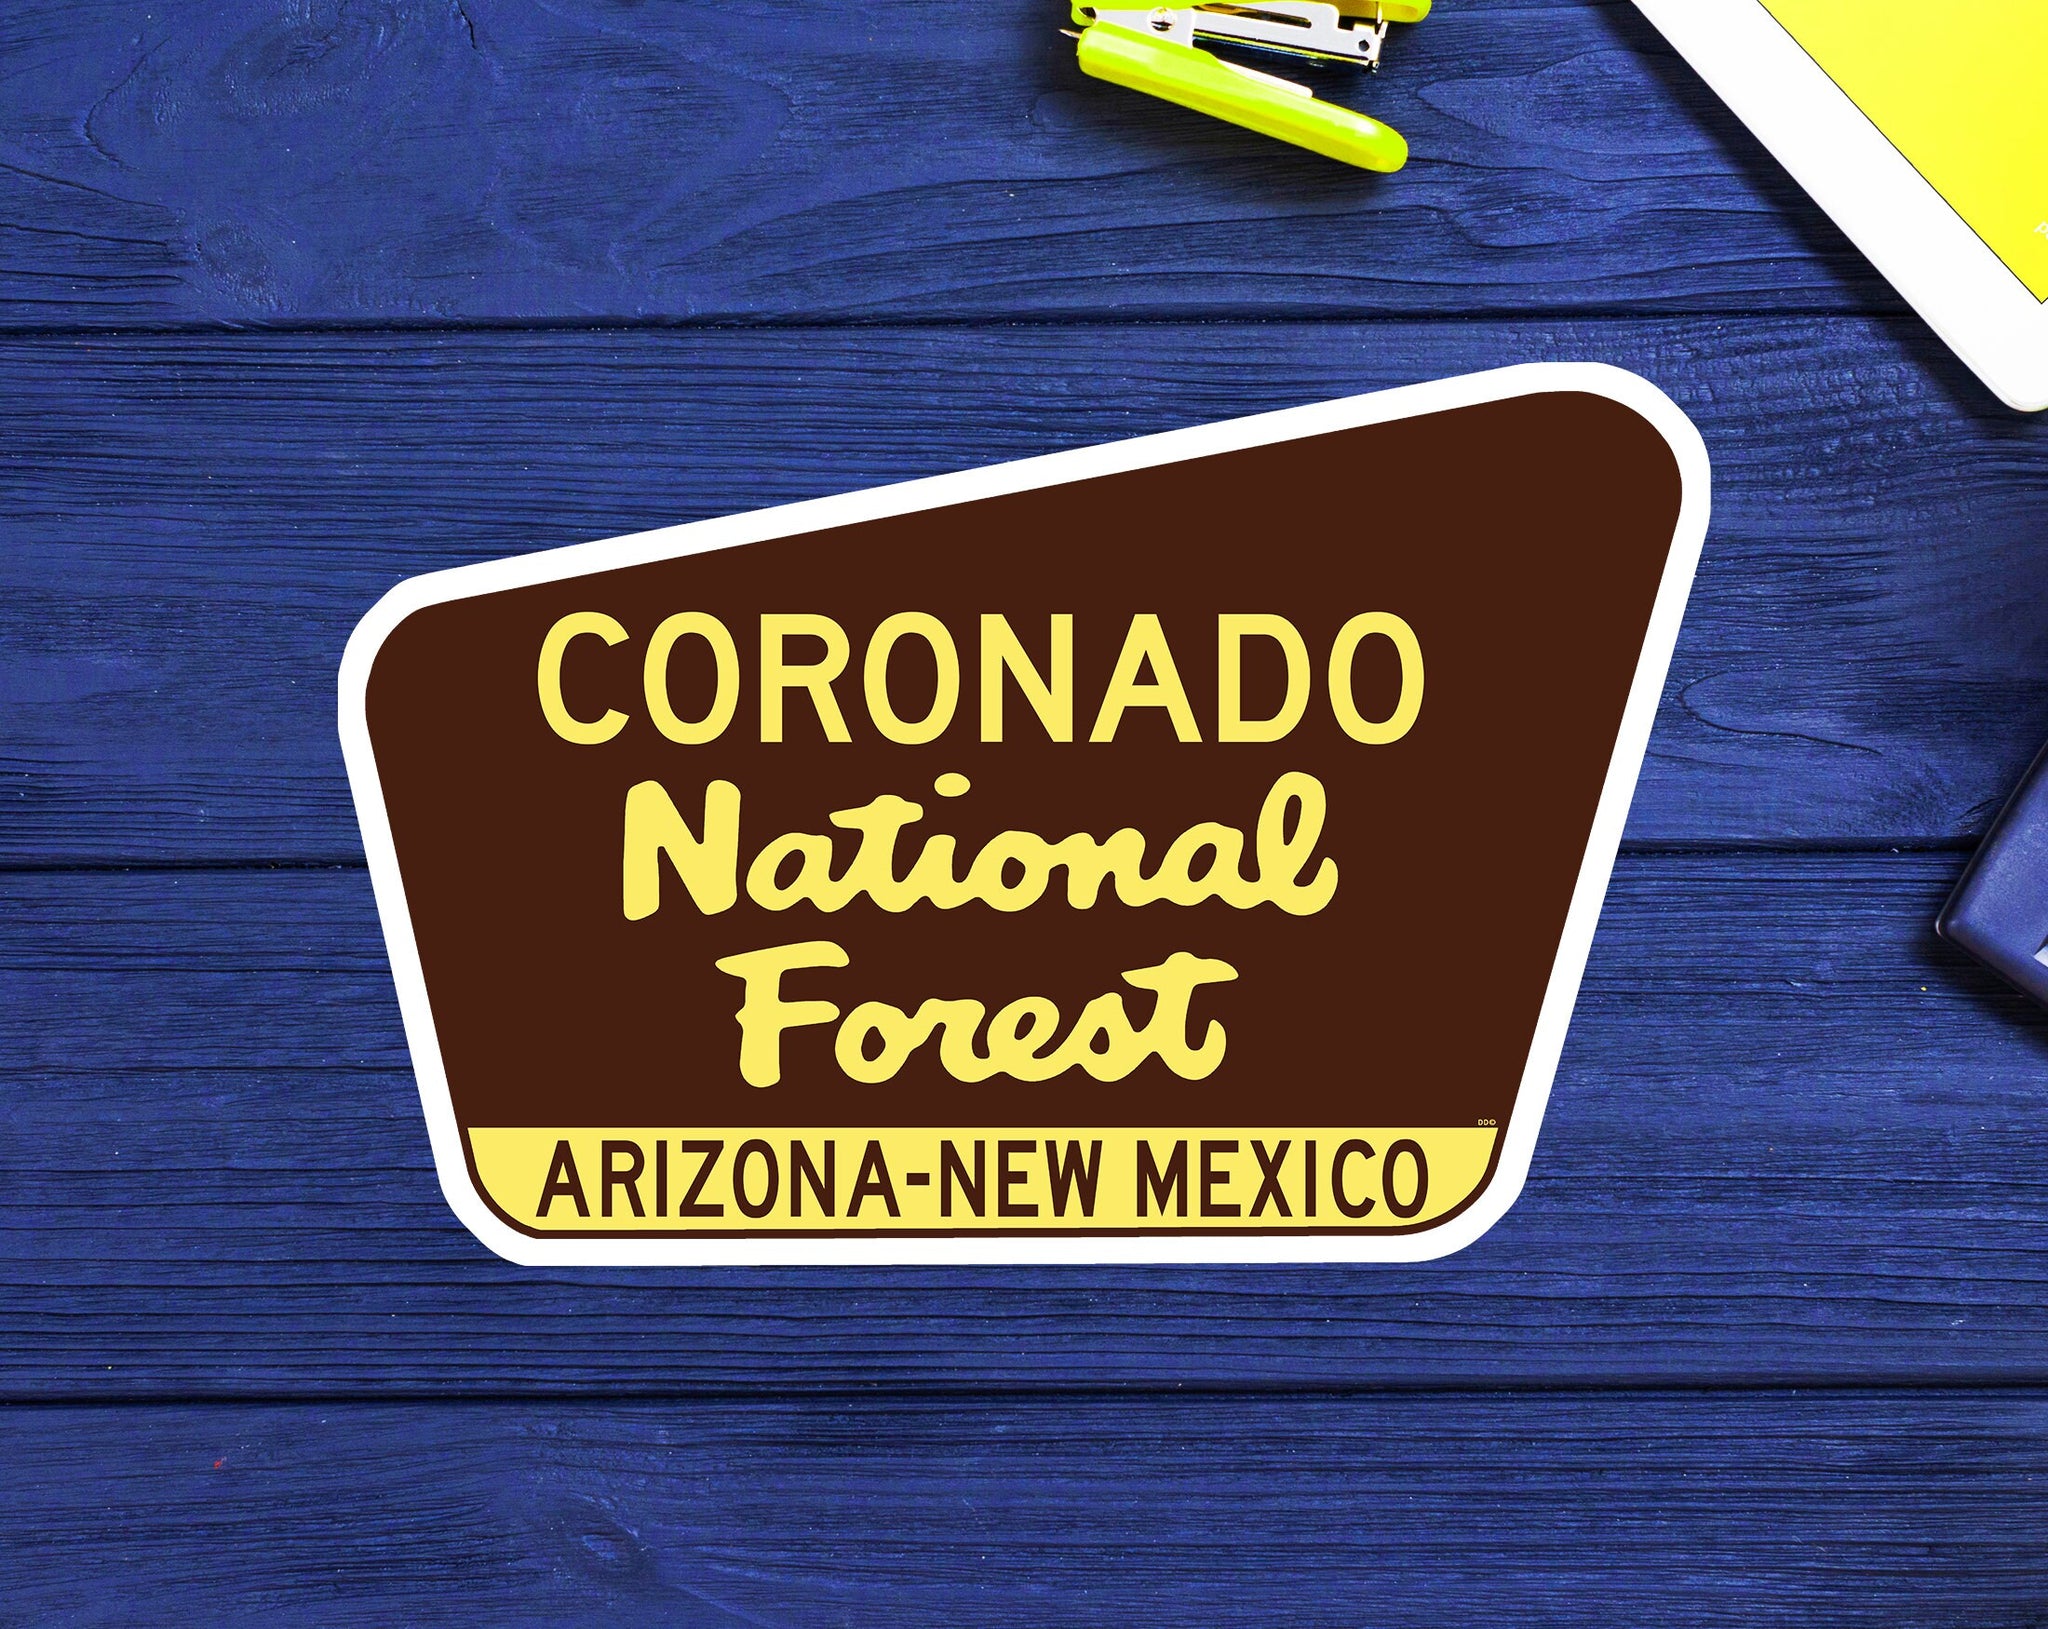 Coronado National Forest Arizona New Mexico Sign 3.75" x 2.5" Park Vinyl